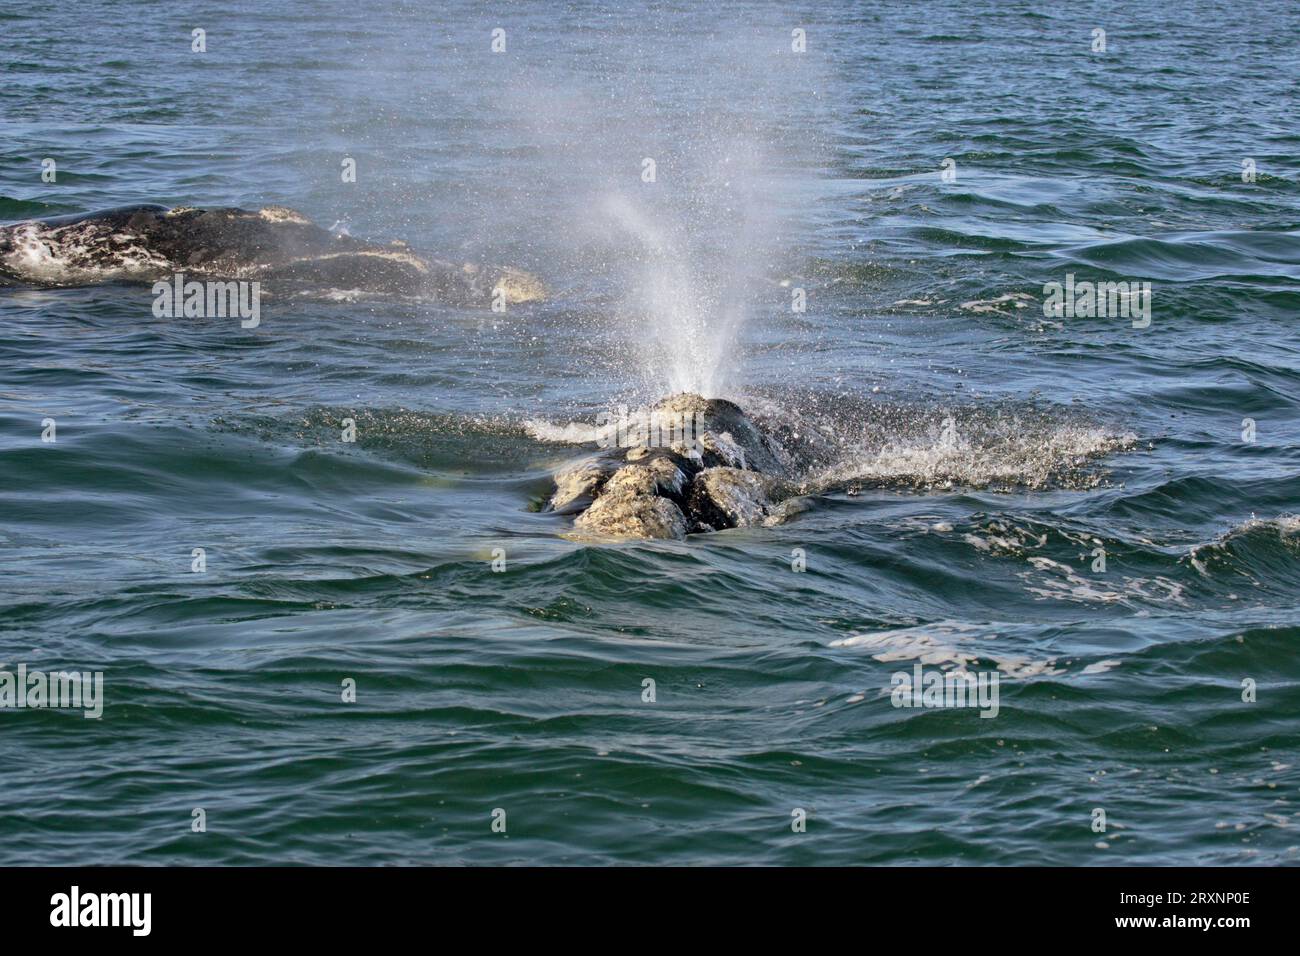 Balena destra meridionale (Eubalaena australis), Sudafrica (Balaena glacialis australis) Foto Stock